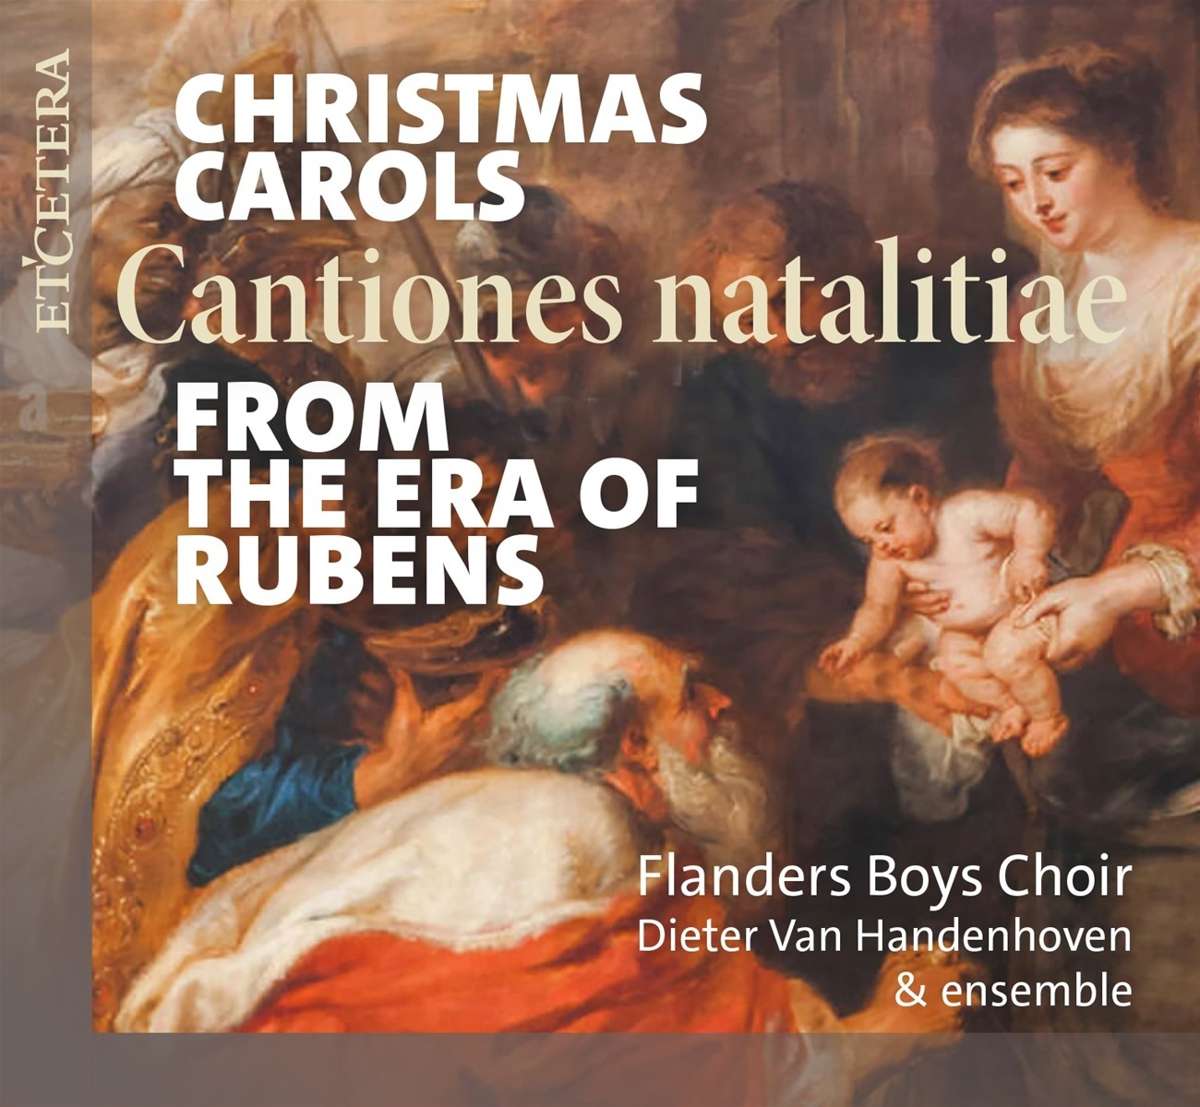 Flanders Boys Choir & Ensemble/Dieter Van Handenhoven - Christmas Carols From the Era of Rubens (Cantiones Natalitiae)